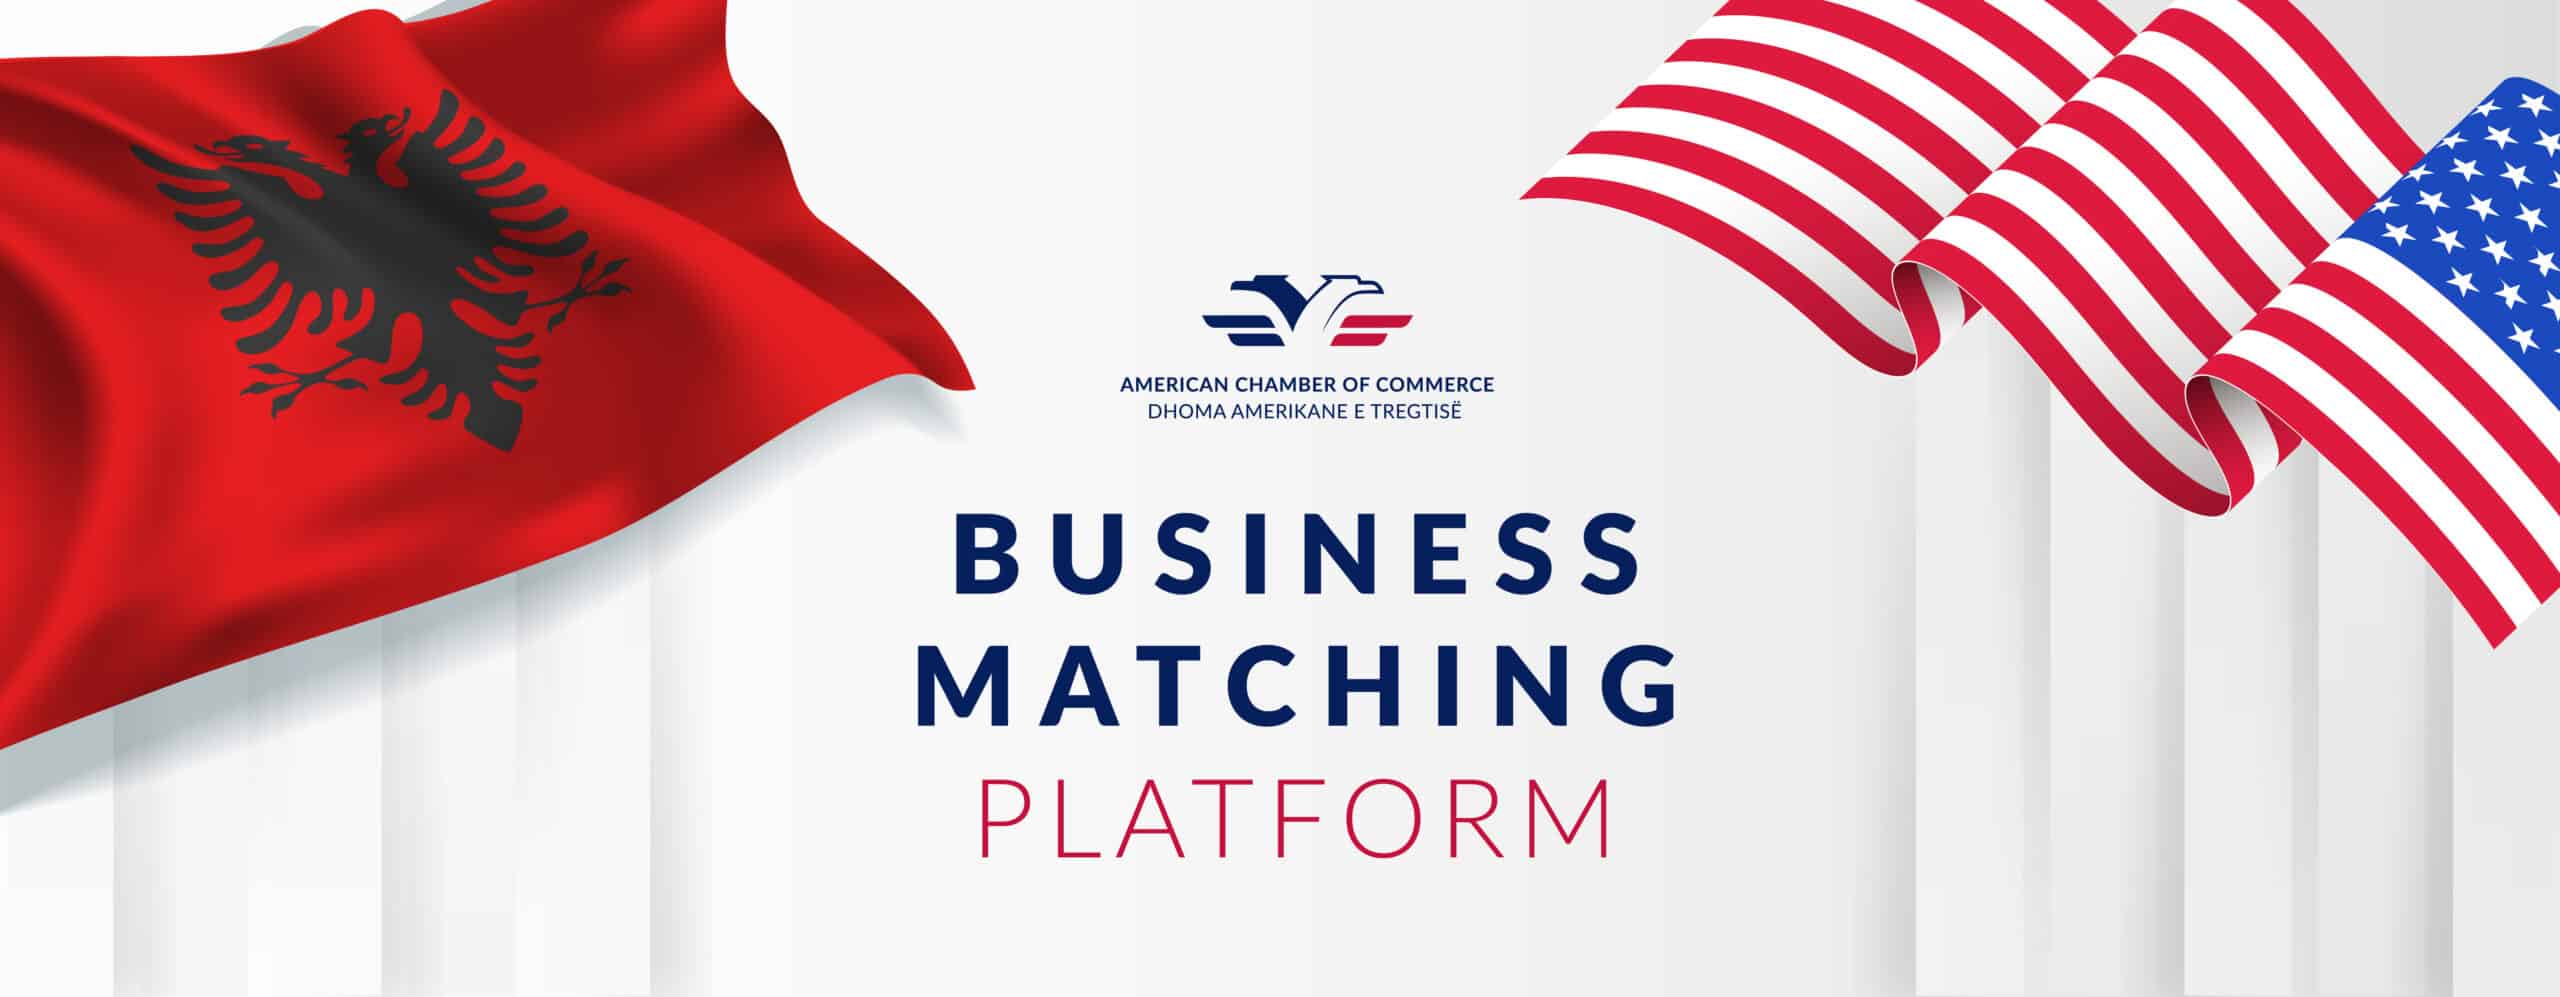 Business Matching Platform